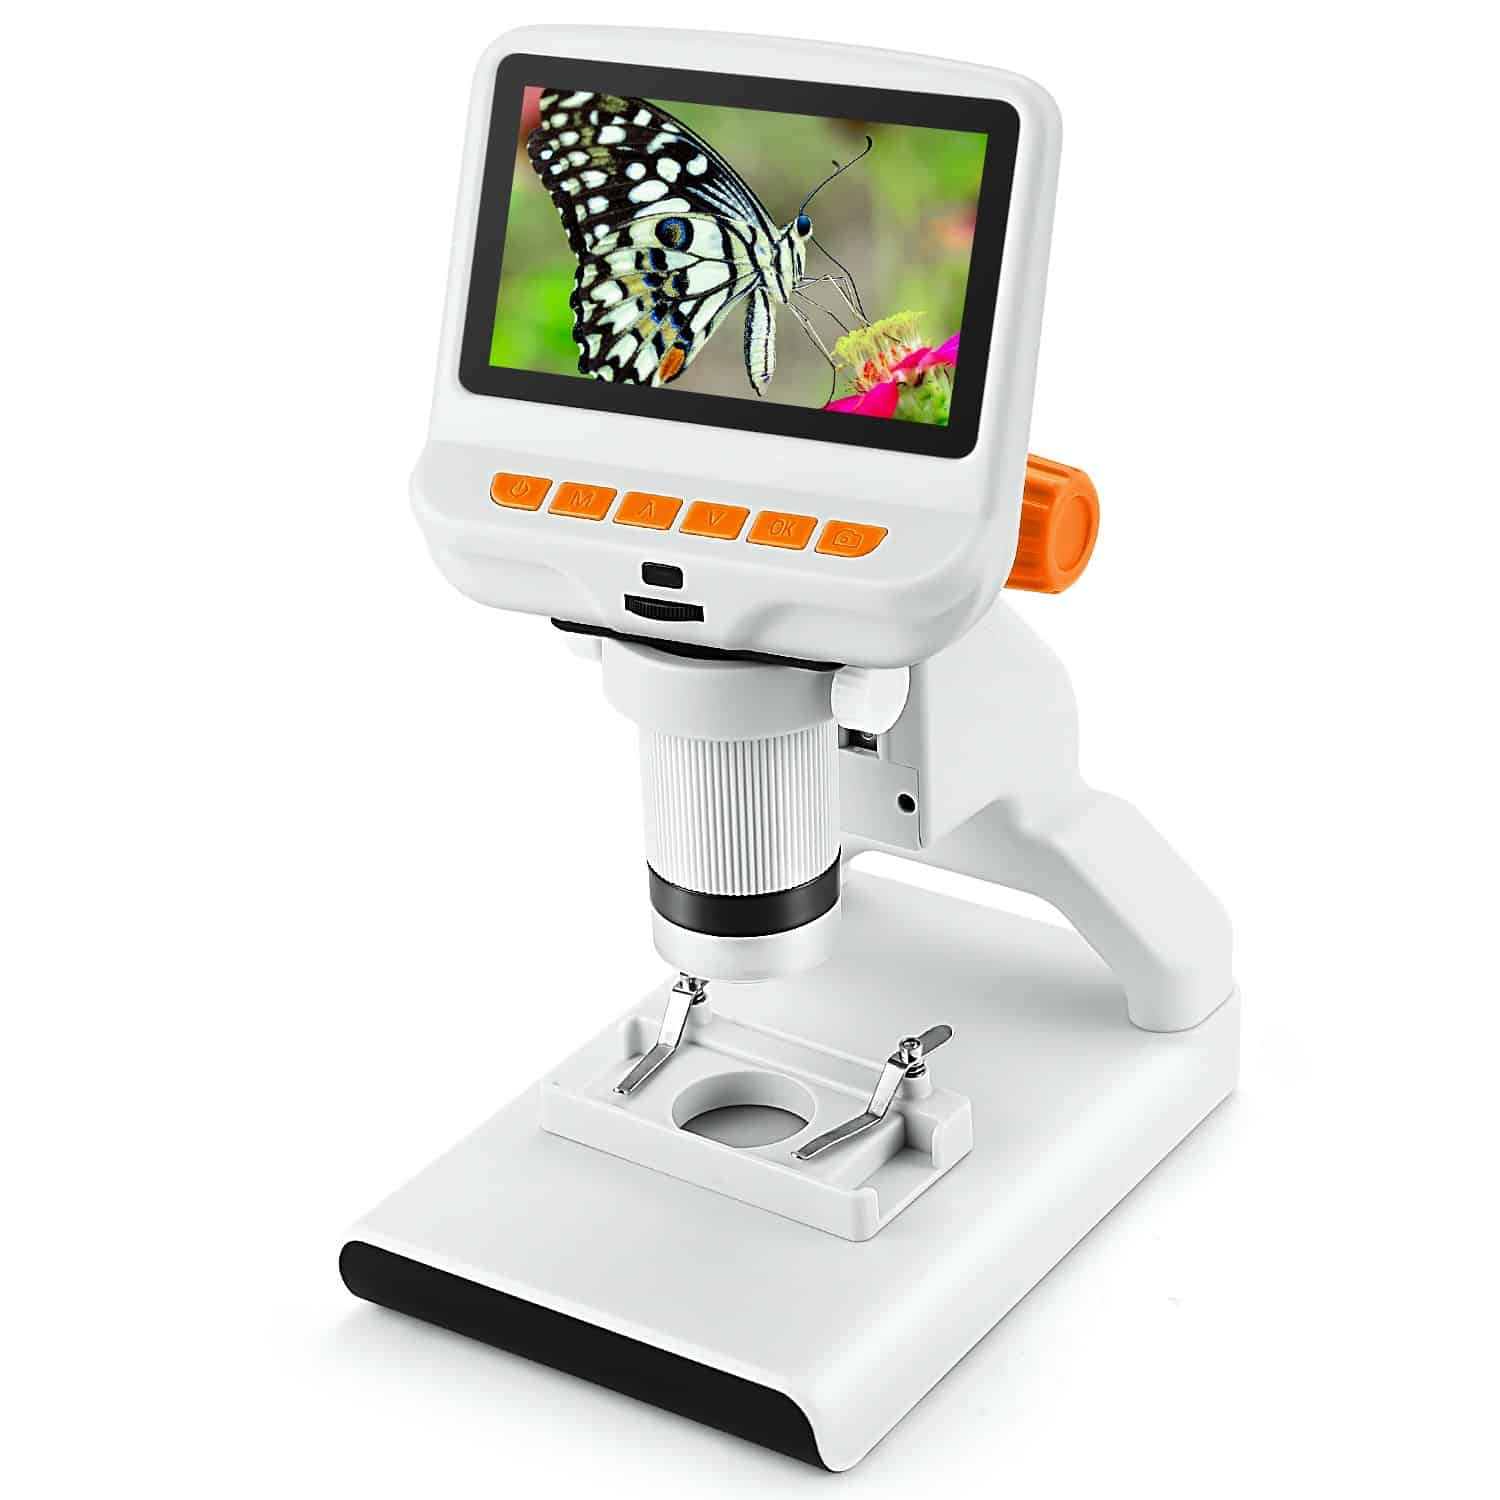 Andonstar AD102 Handheld USB Digital Microscope for Children for Slides Observation